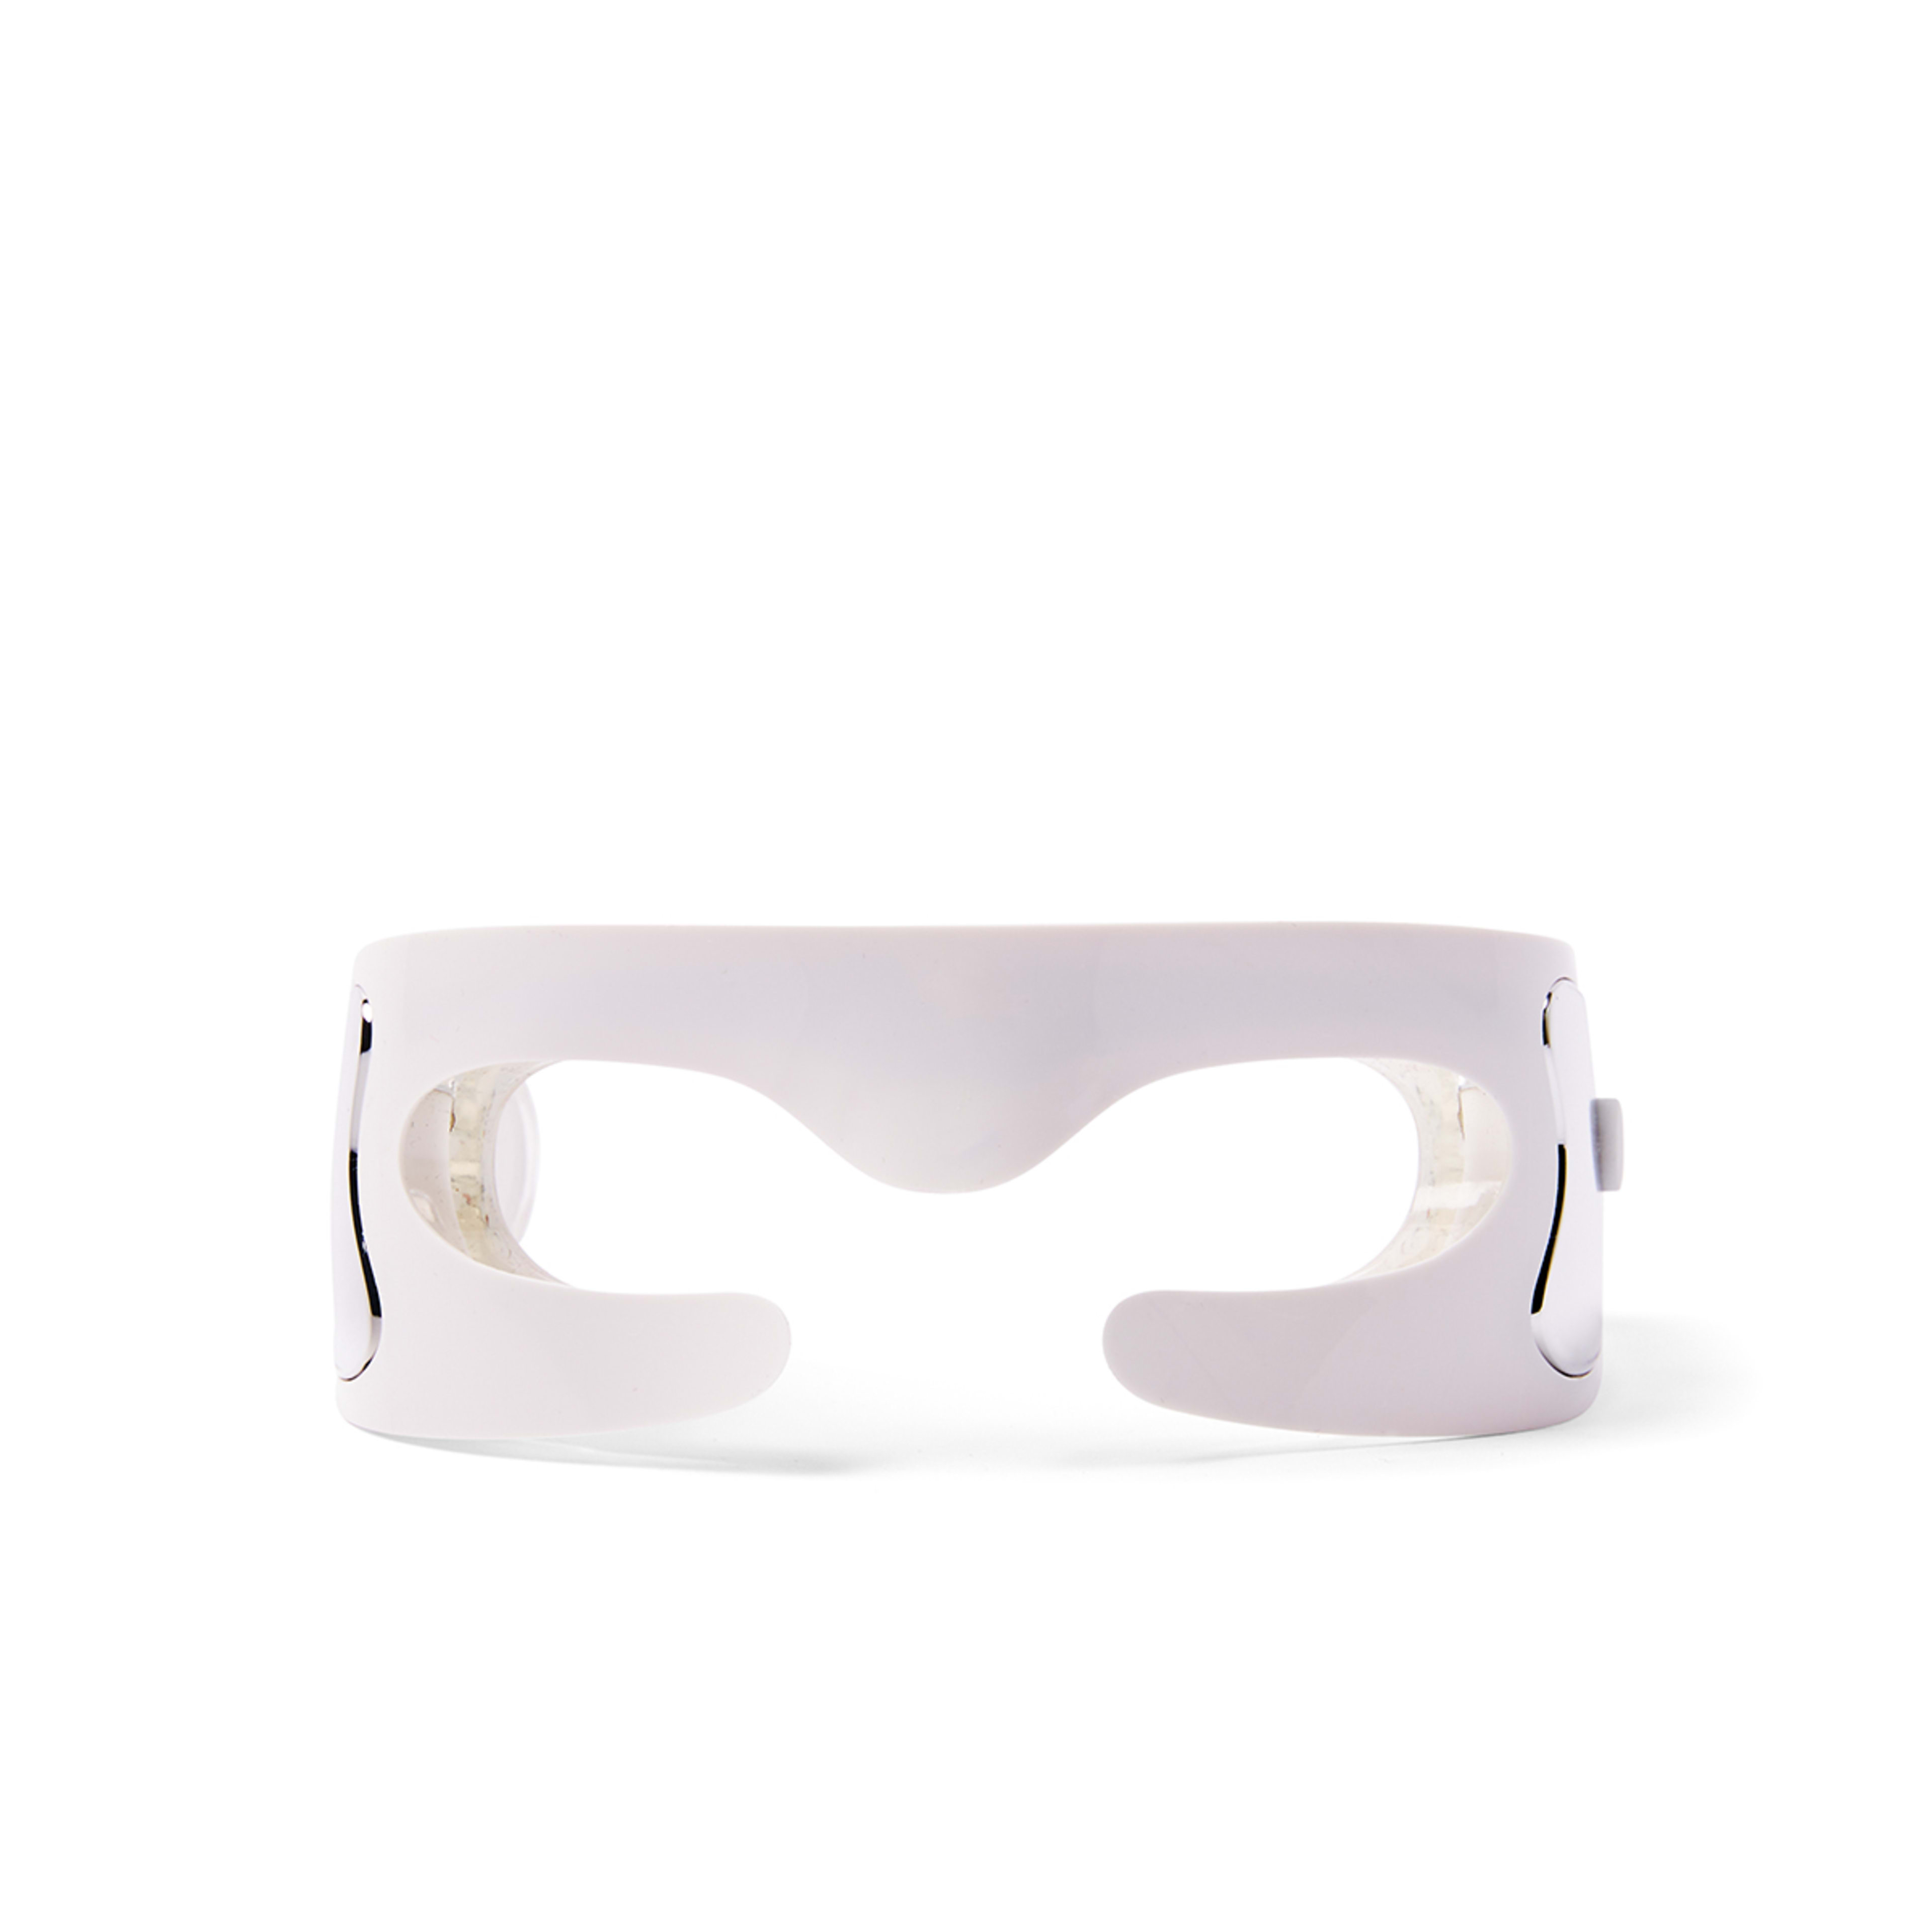 LED Light Therapy Glasses - Kmart